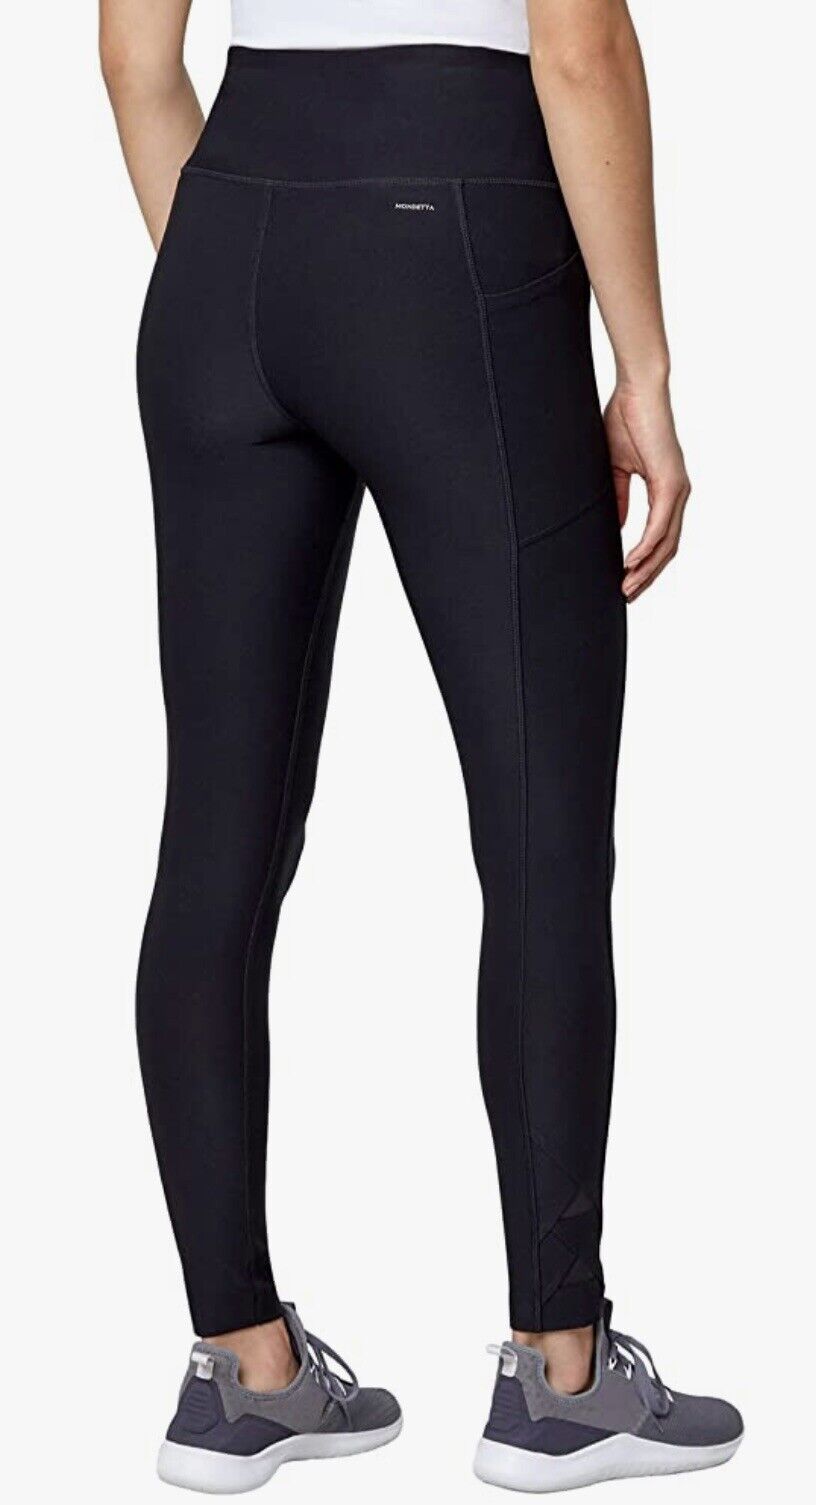 Mondetta sporty leggings with a flattering design, size L